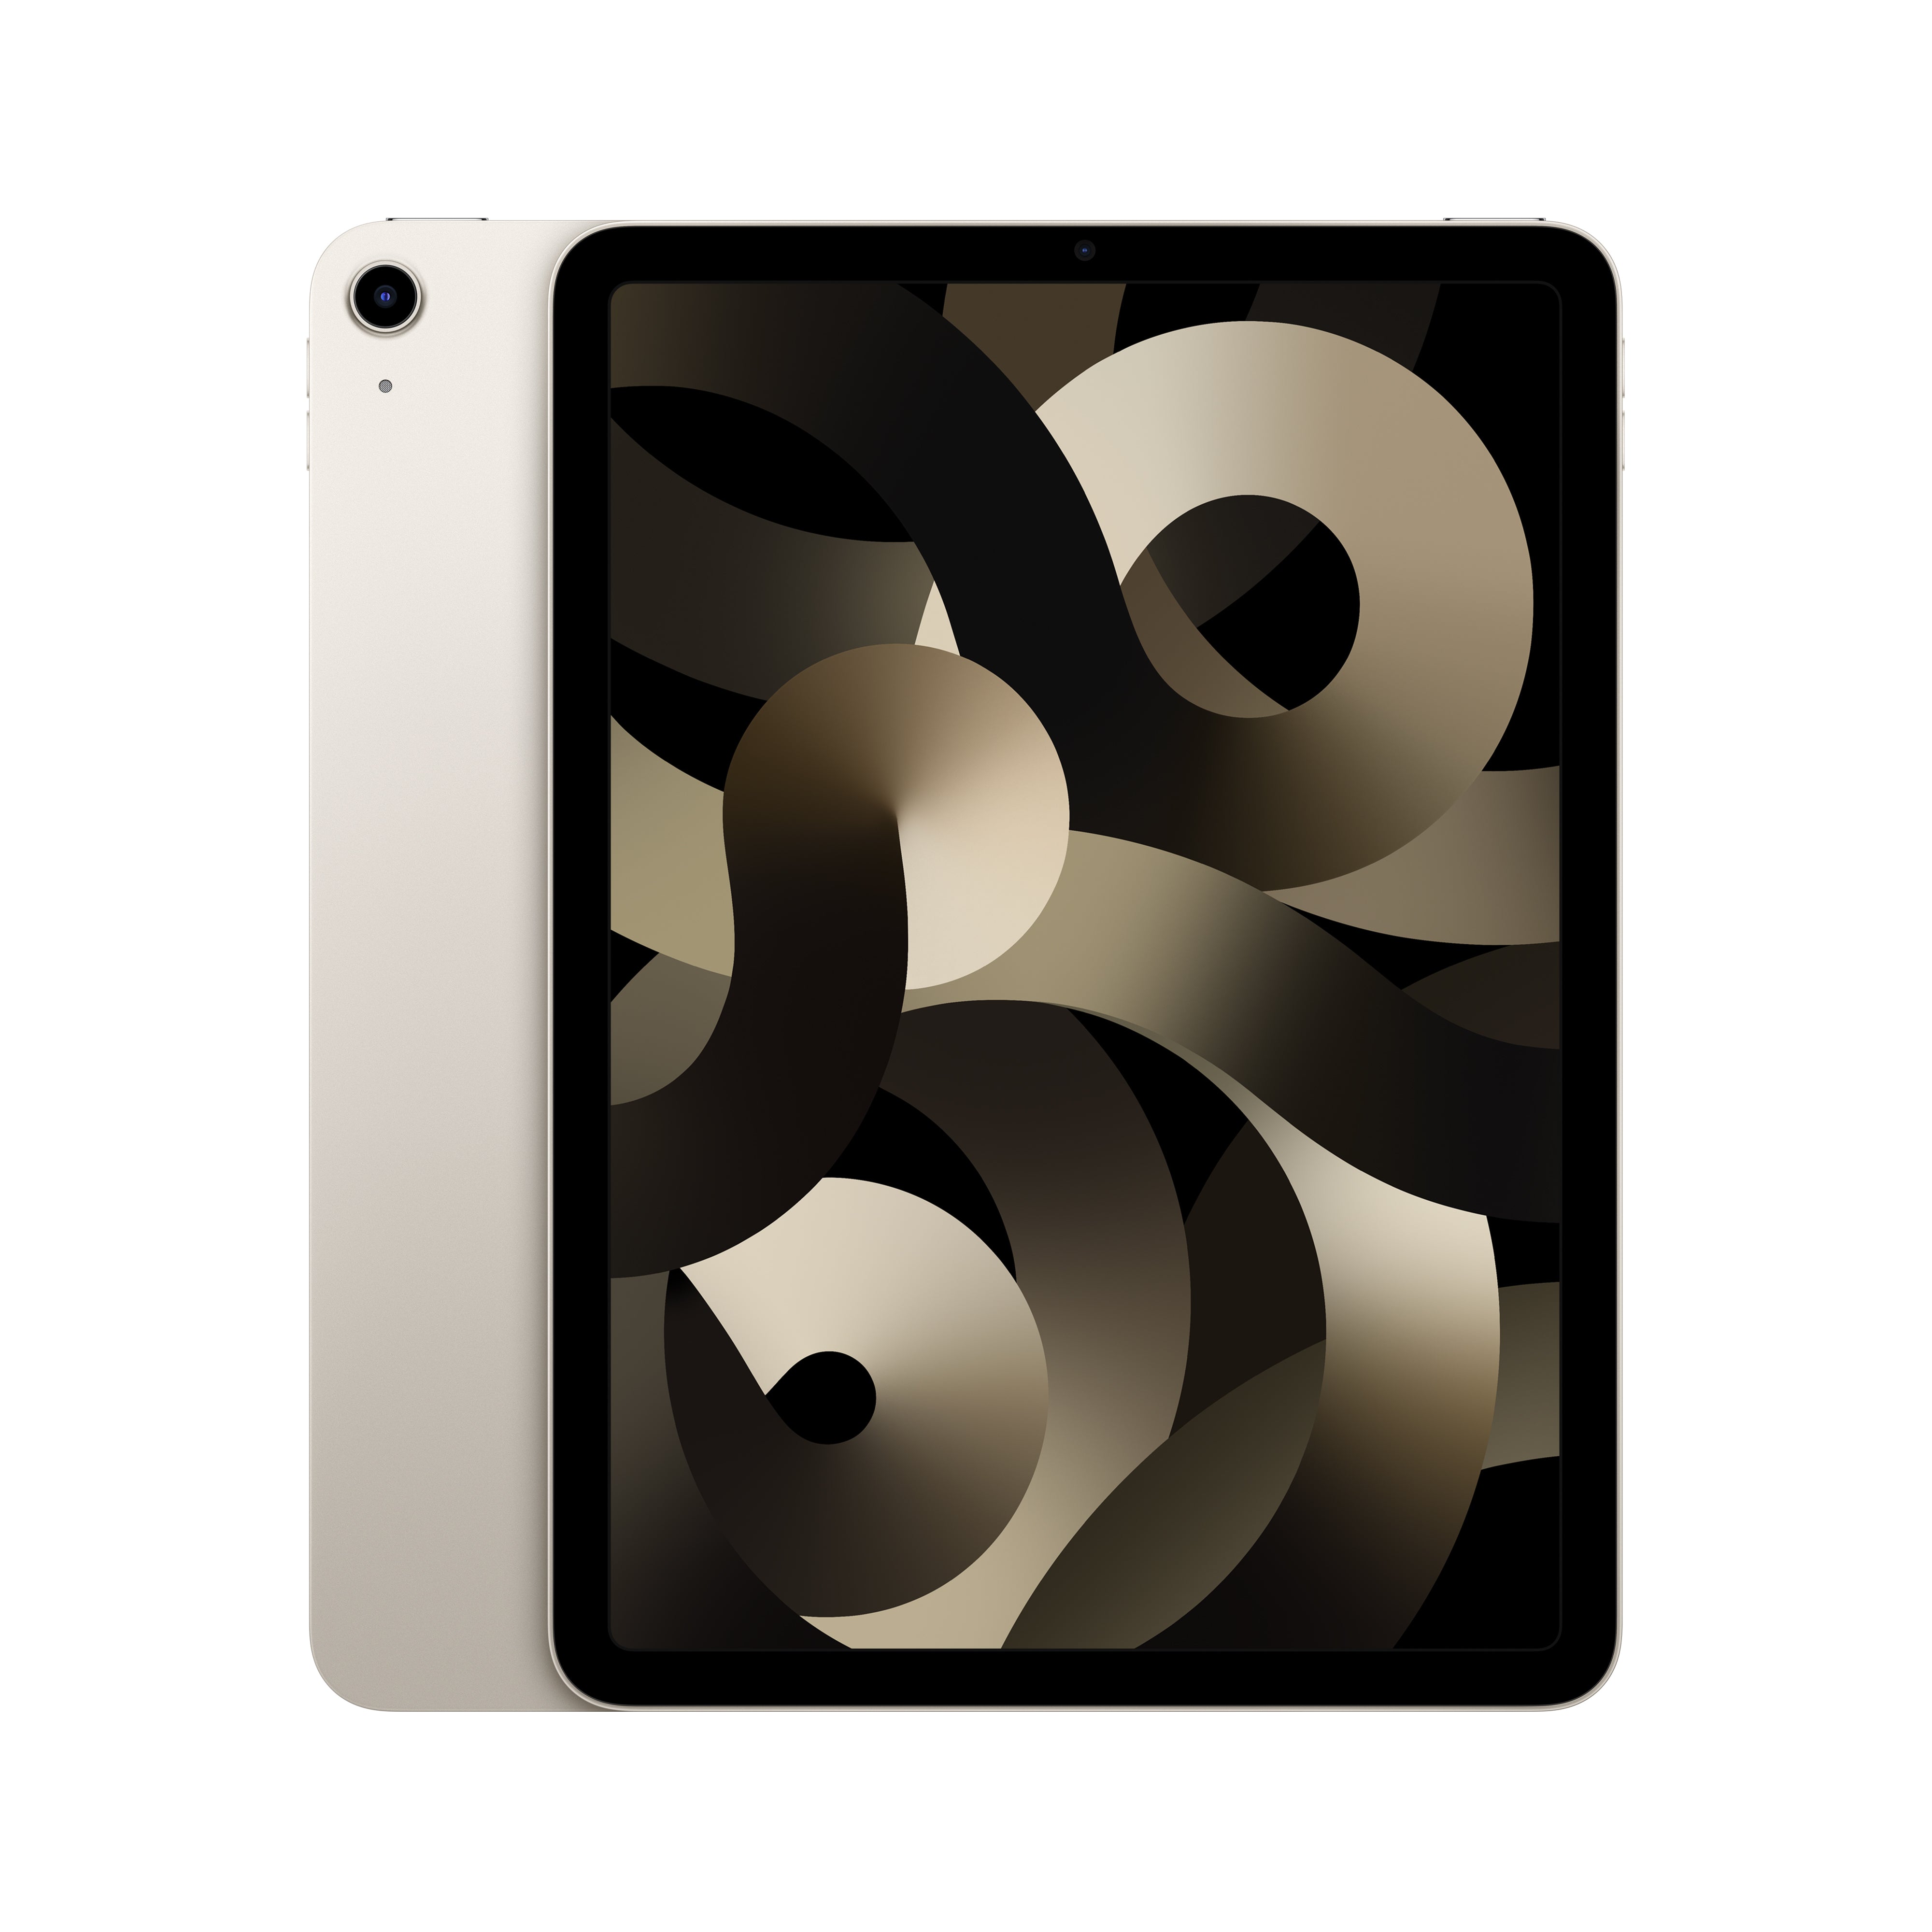 iPad Air - New Gauge Digital